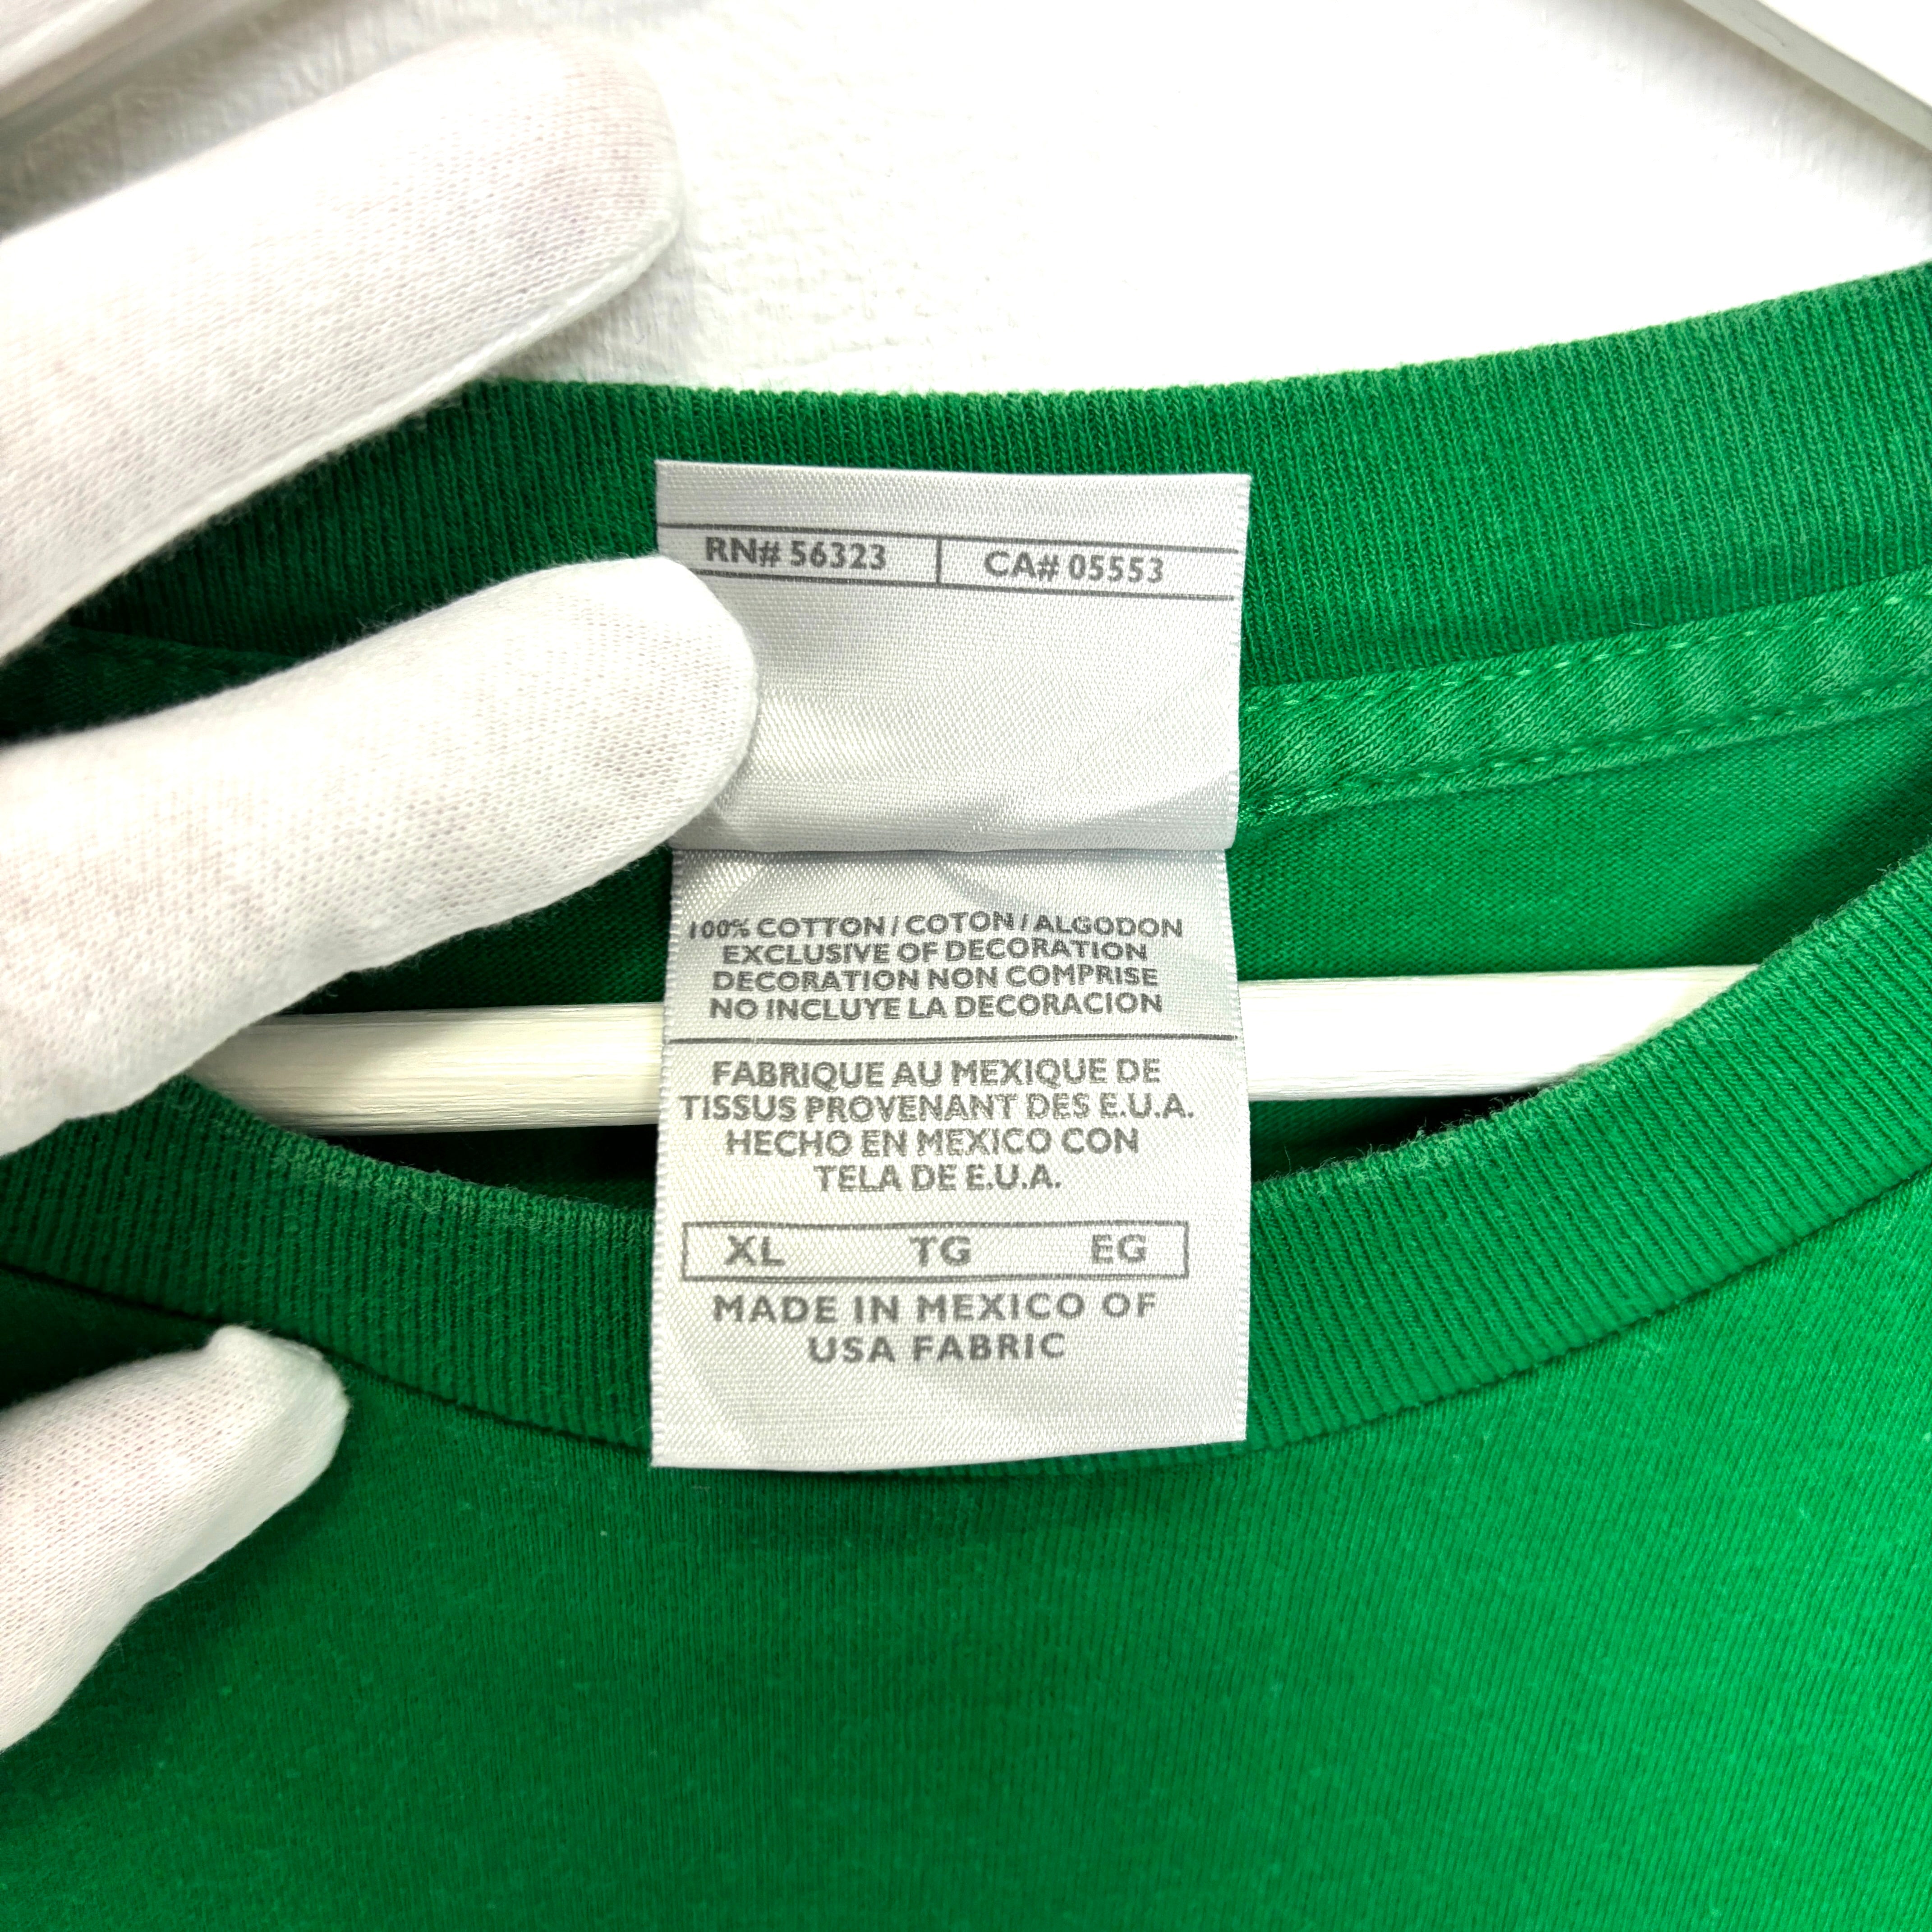 NIKE Long Sleeve T-Shirt Green with Junkie Print Dunk High